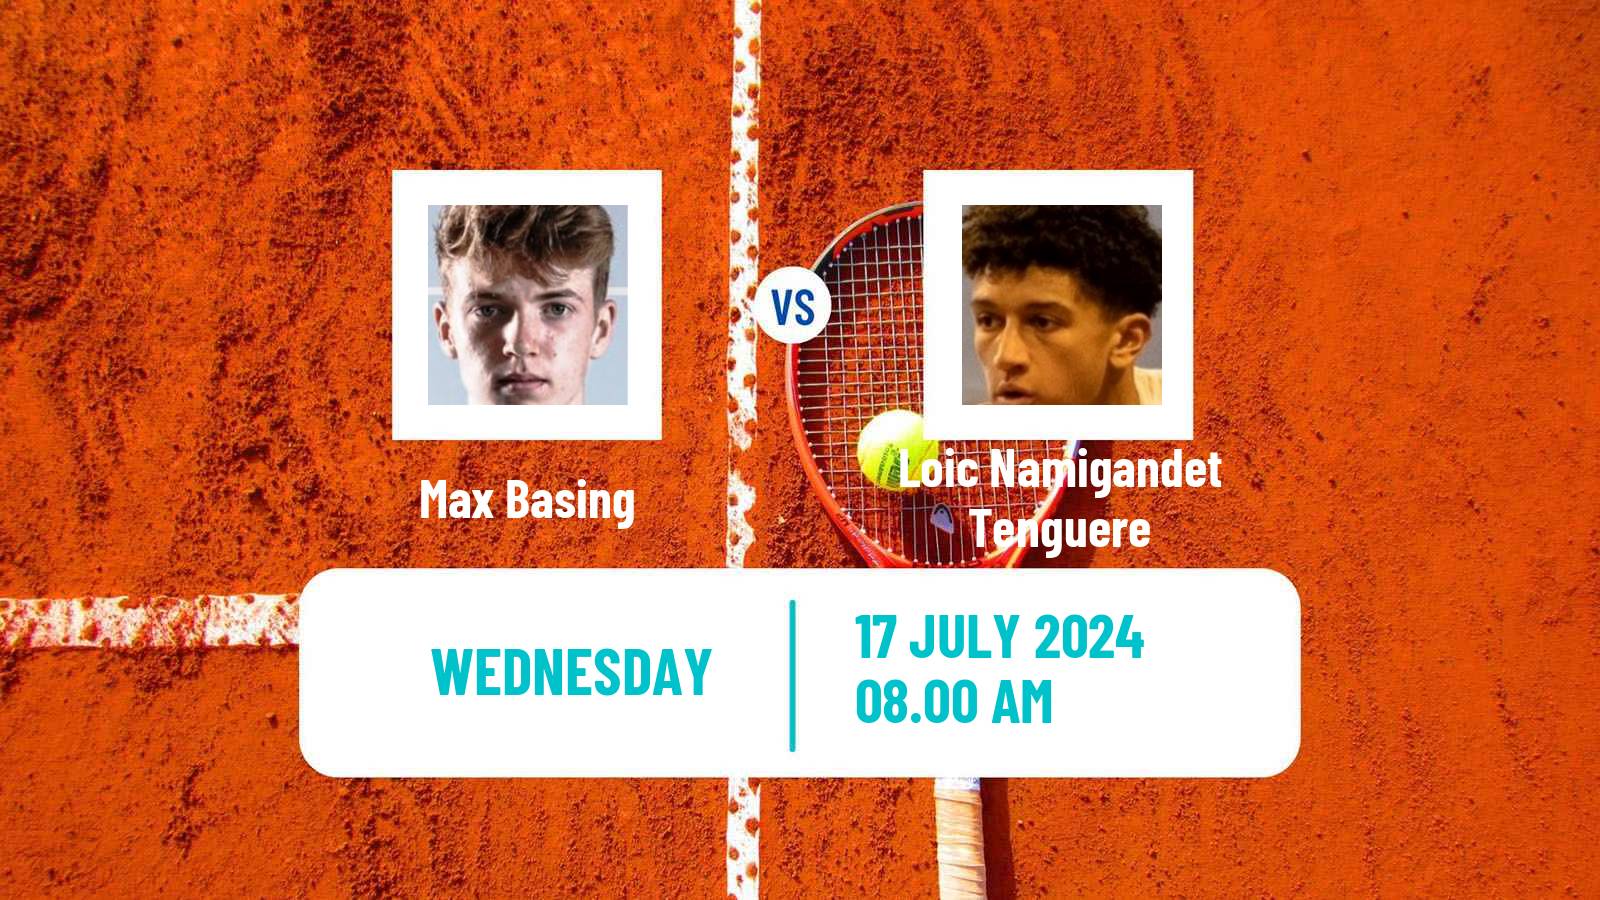 Tennis ITF M25 Nottingham 4 Men Max Basing - Loic Namigandet Tenguere